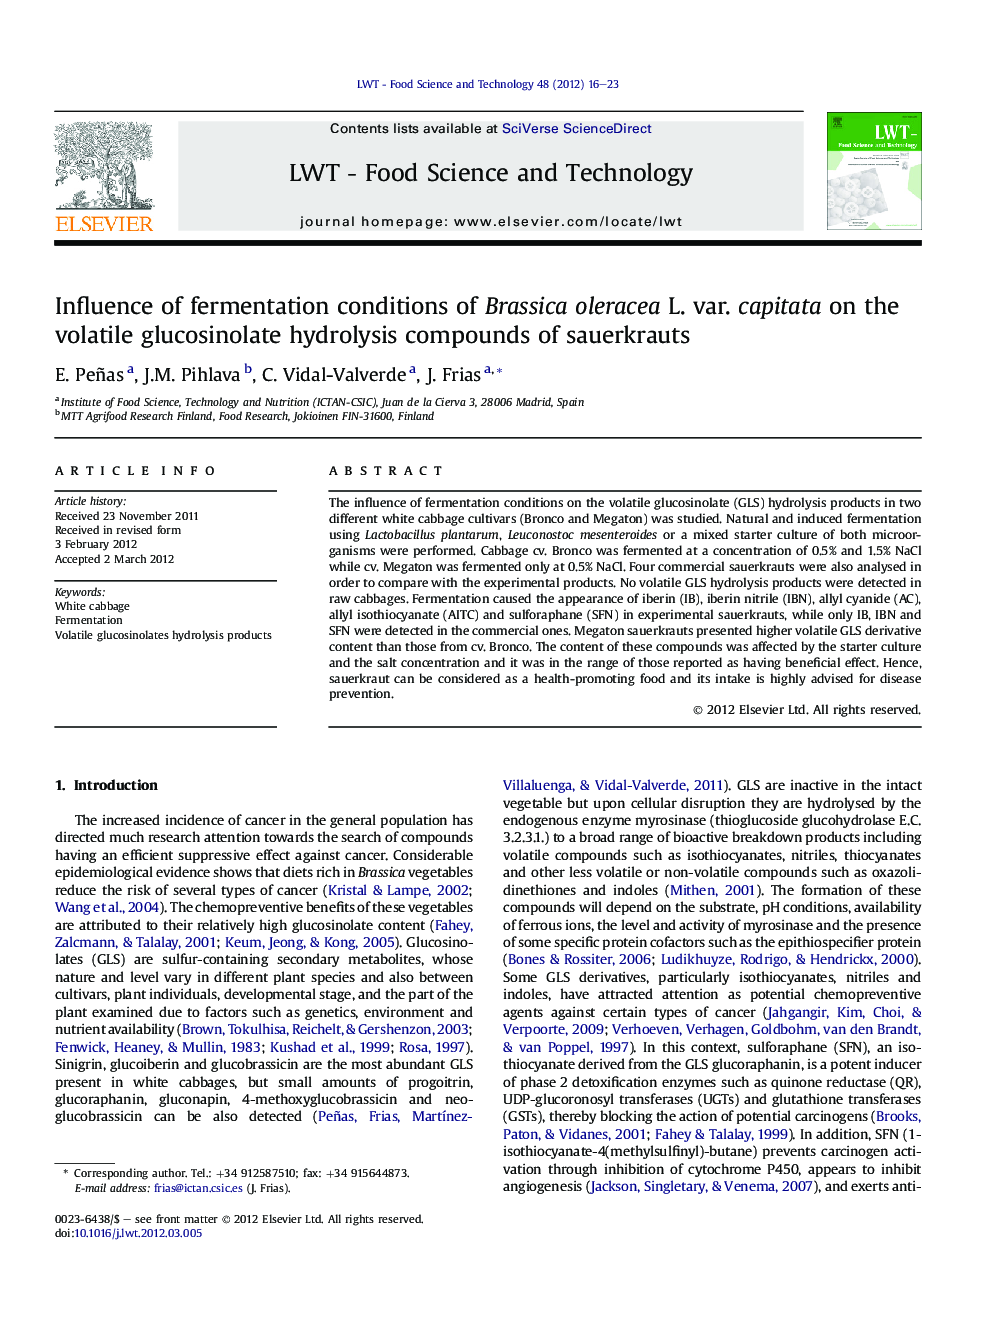 Influence of fermentation conditions of Brassica oleracea L. var. capitata on the volatile glucosinolate hydrolysis compounds of sauerkrauts